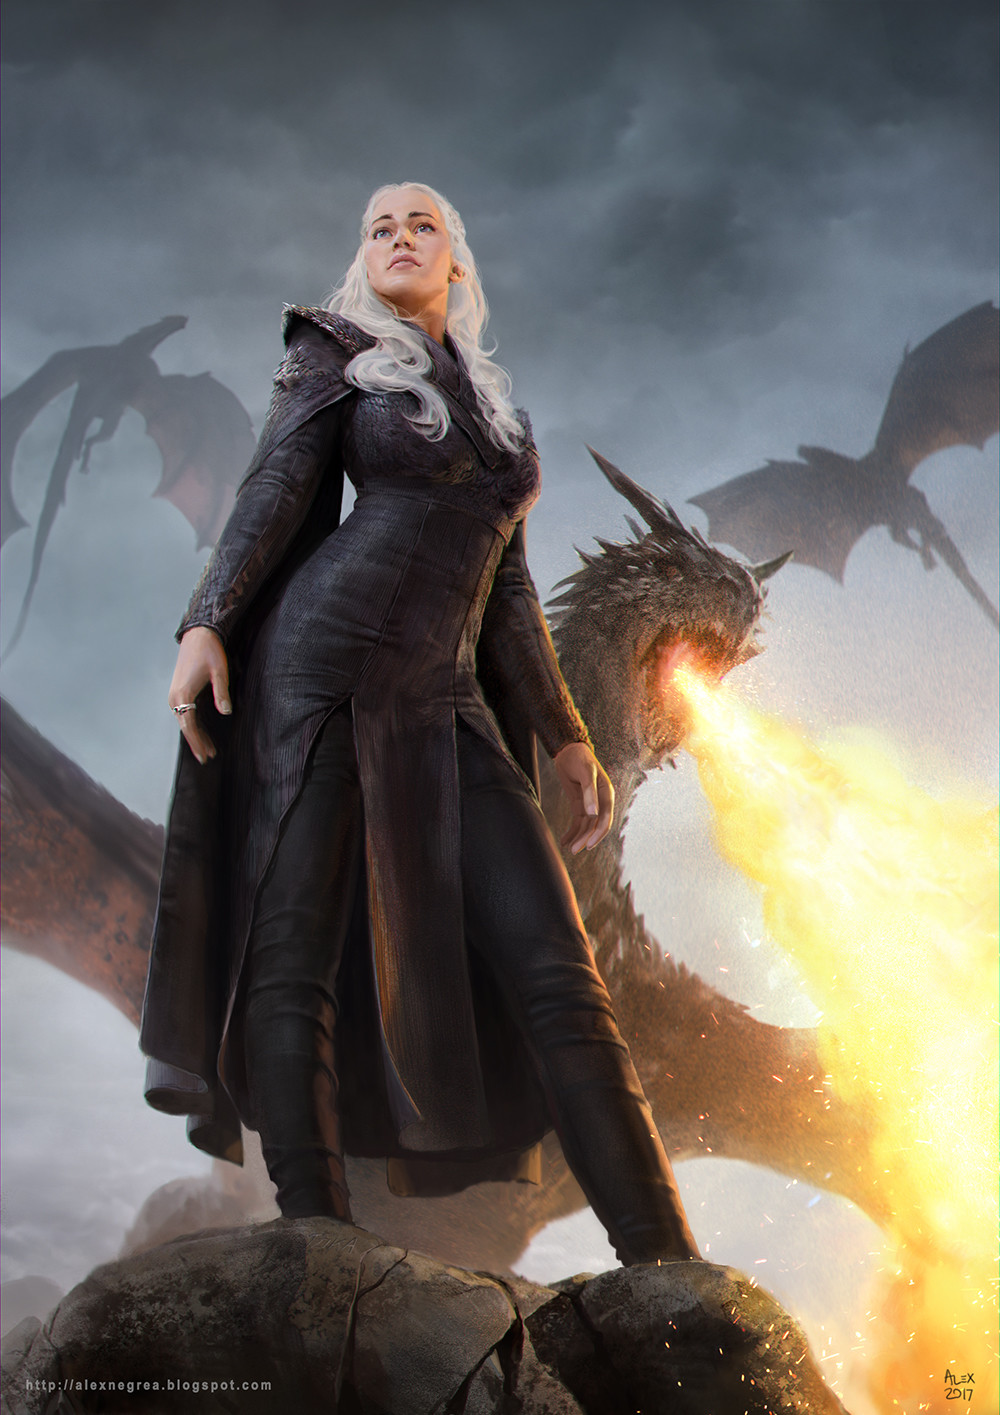 General 1000x1415 TV series Game of Thrones Daenerys Targaryen dragon creature fire fantasy art fantasy girl women looking into the distance